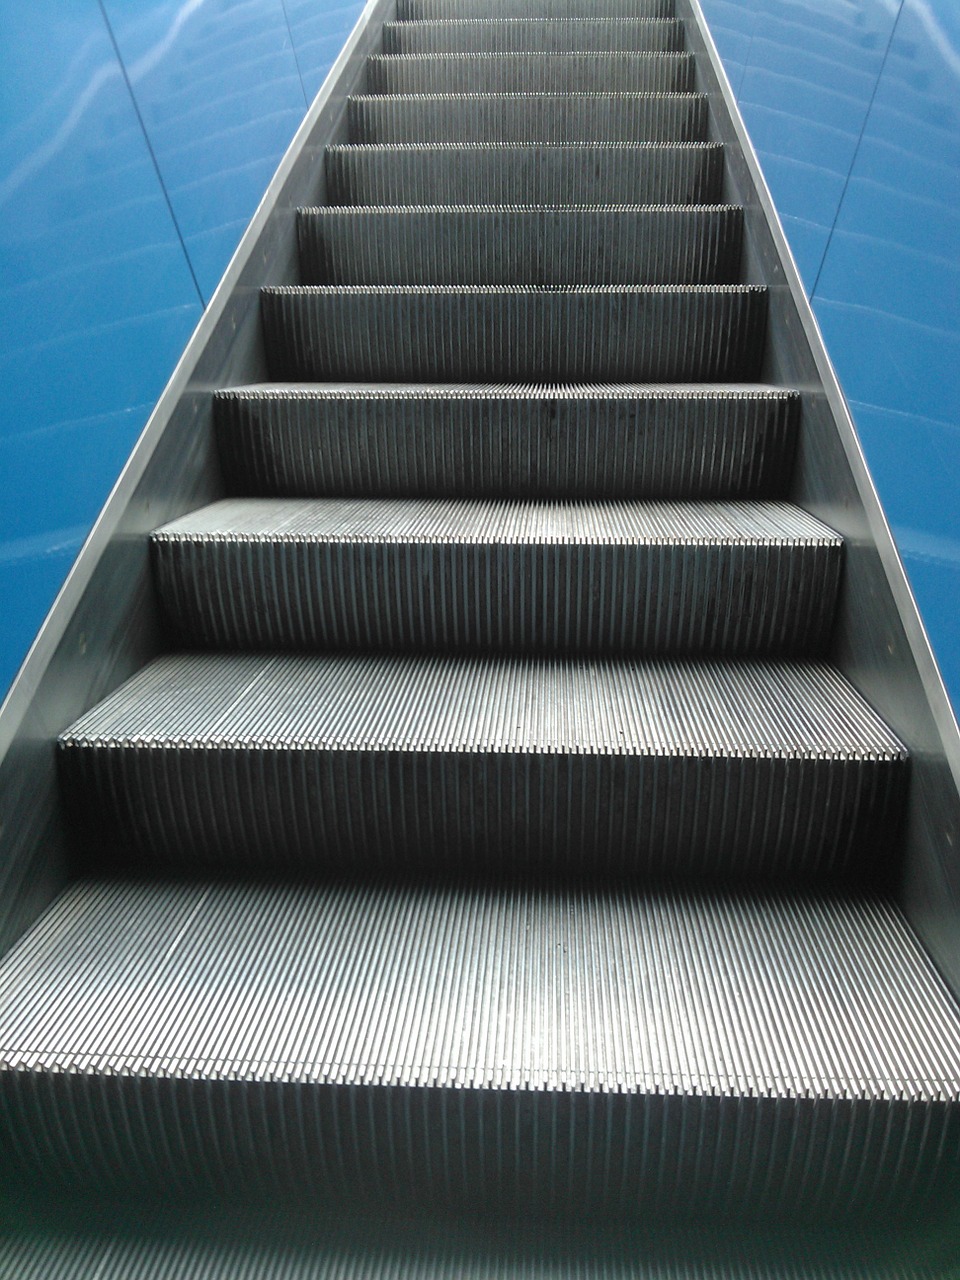 escalator munich öpnv free photo